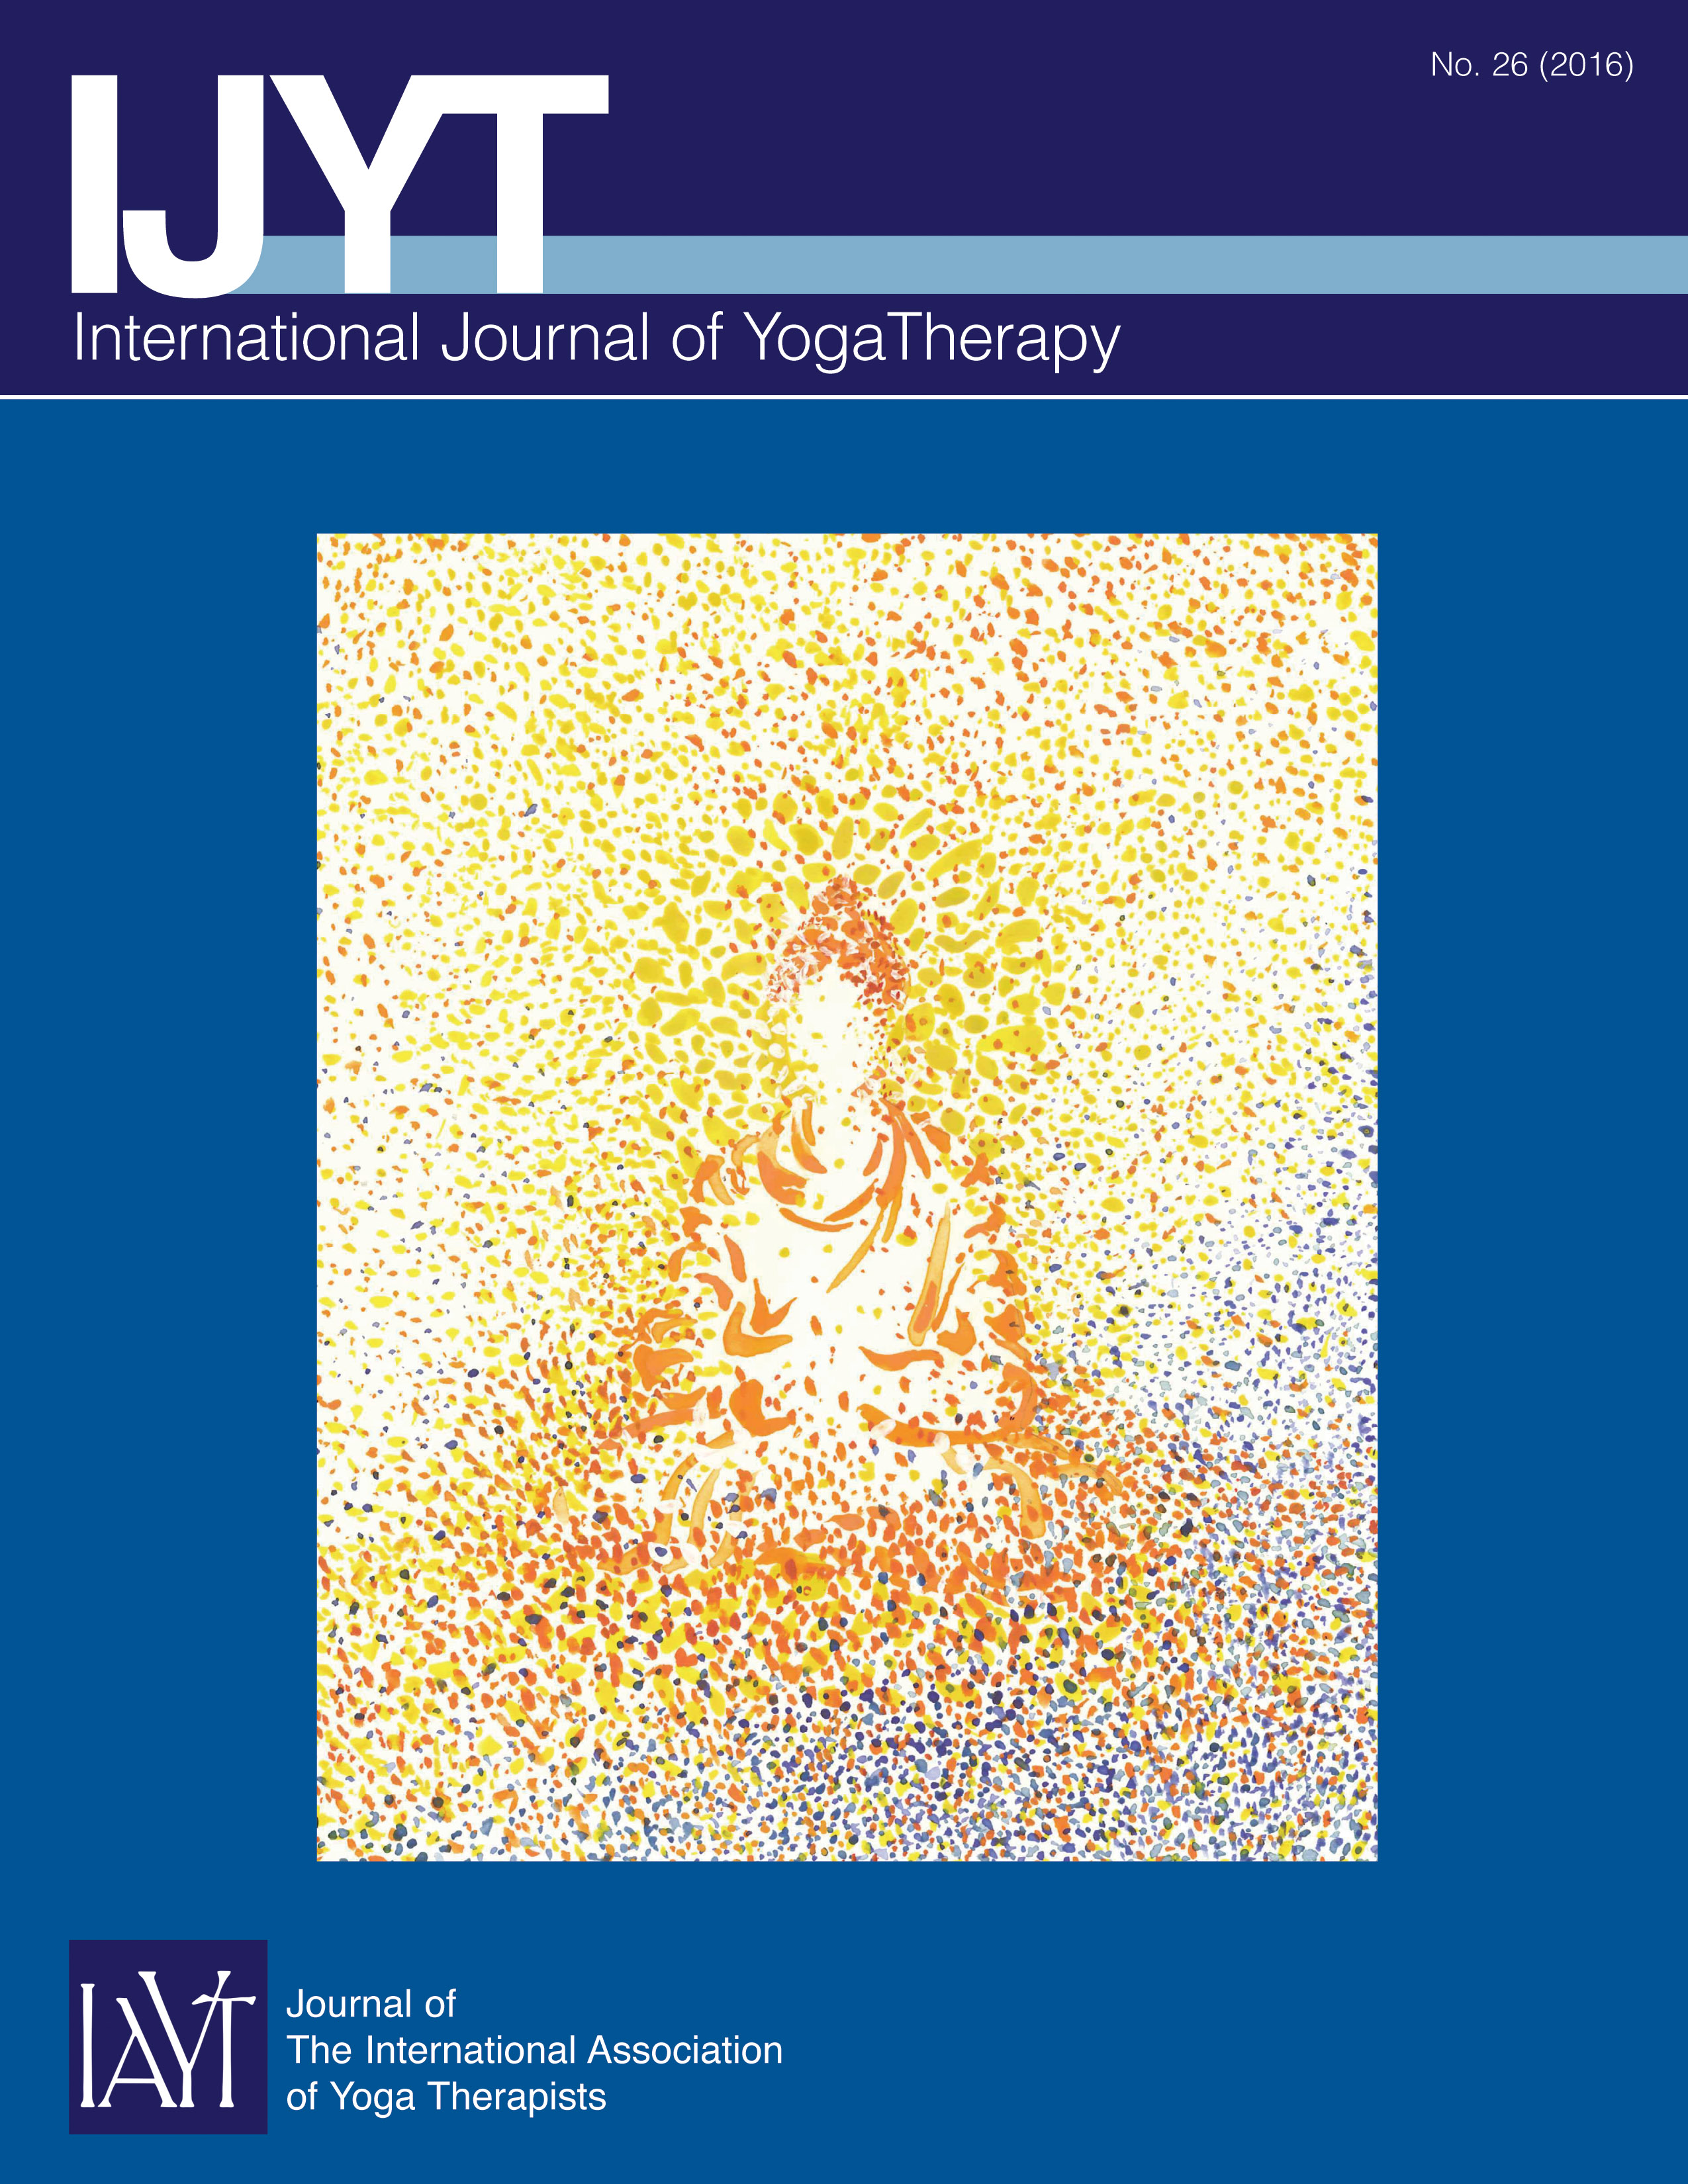 International Journal of Yoga